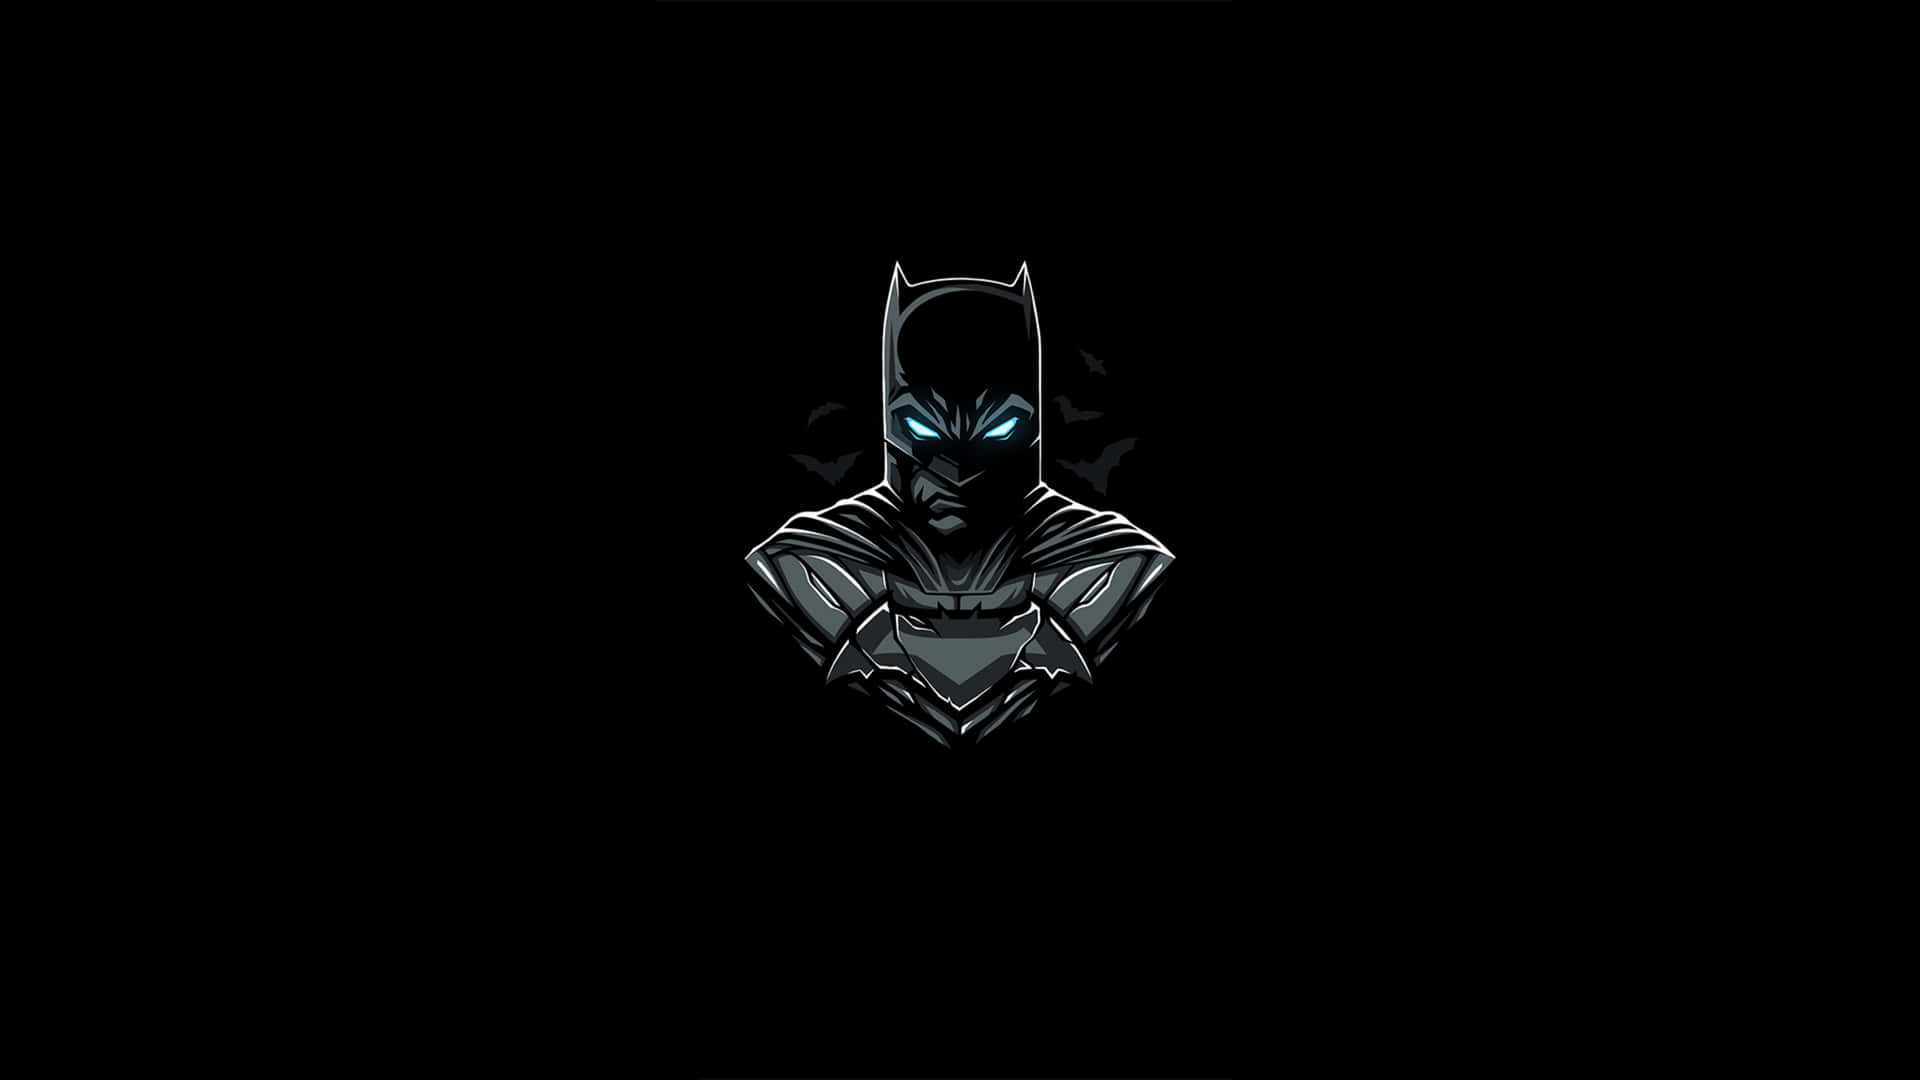 Batman1440p Amoled Hintergrund.